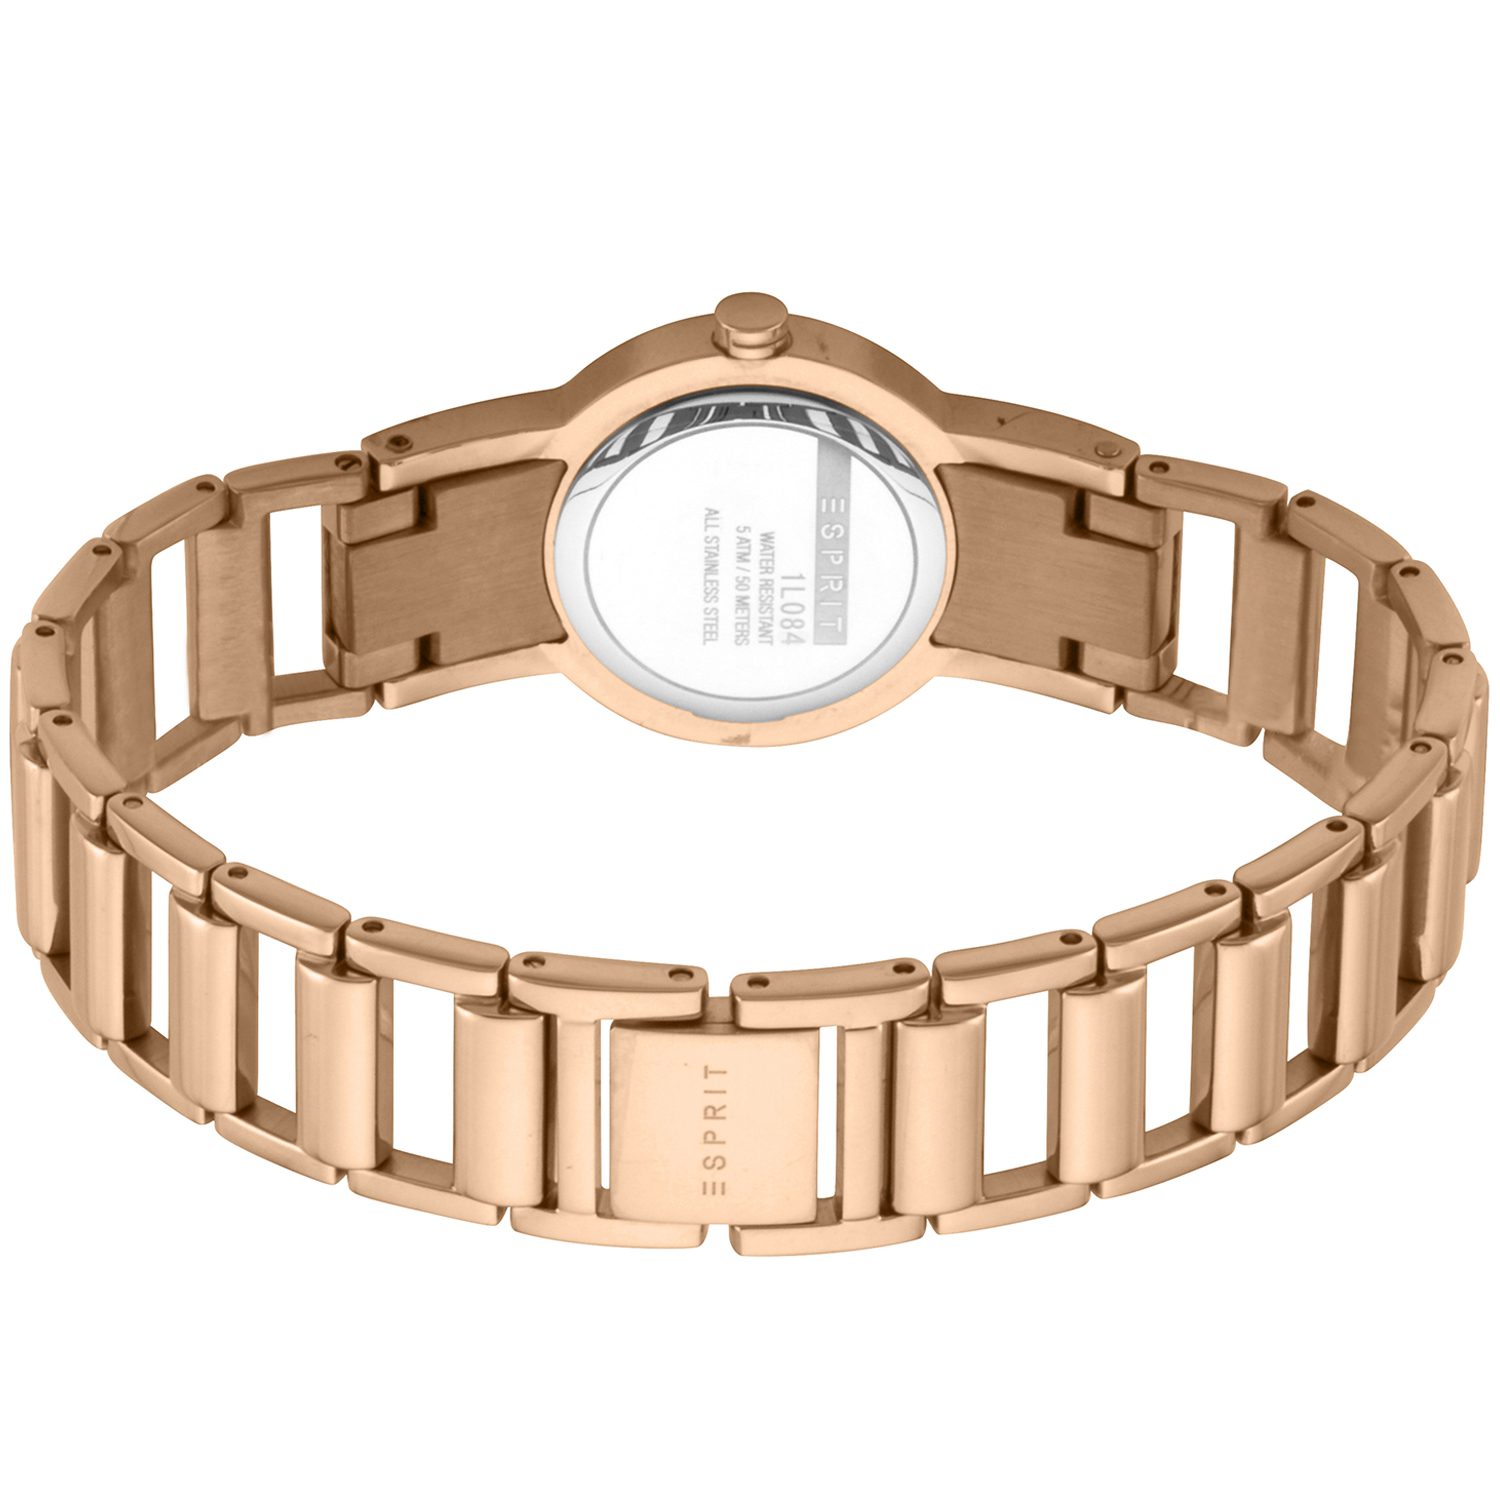 Esprit dames horloge - 5ATM rosé goud polshorloge - elegante watch - ES1L084M0035